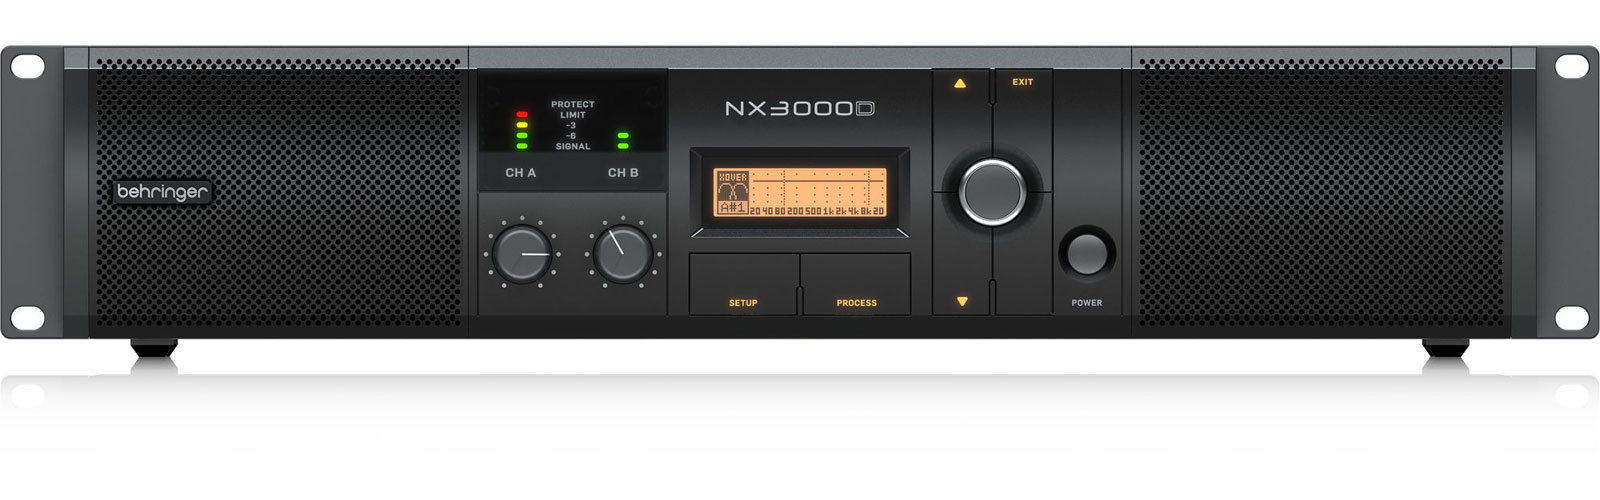 BEHRINGER NX3000D - AMPLI STEREO 1 500 WATTS AVEC DSP